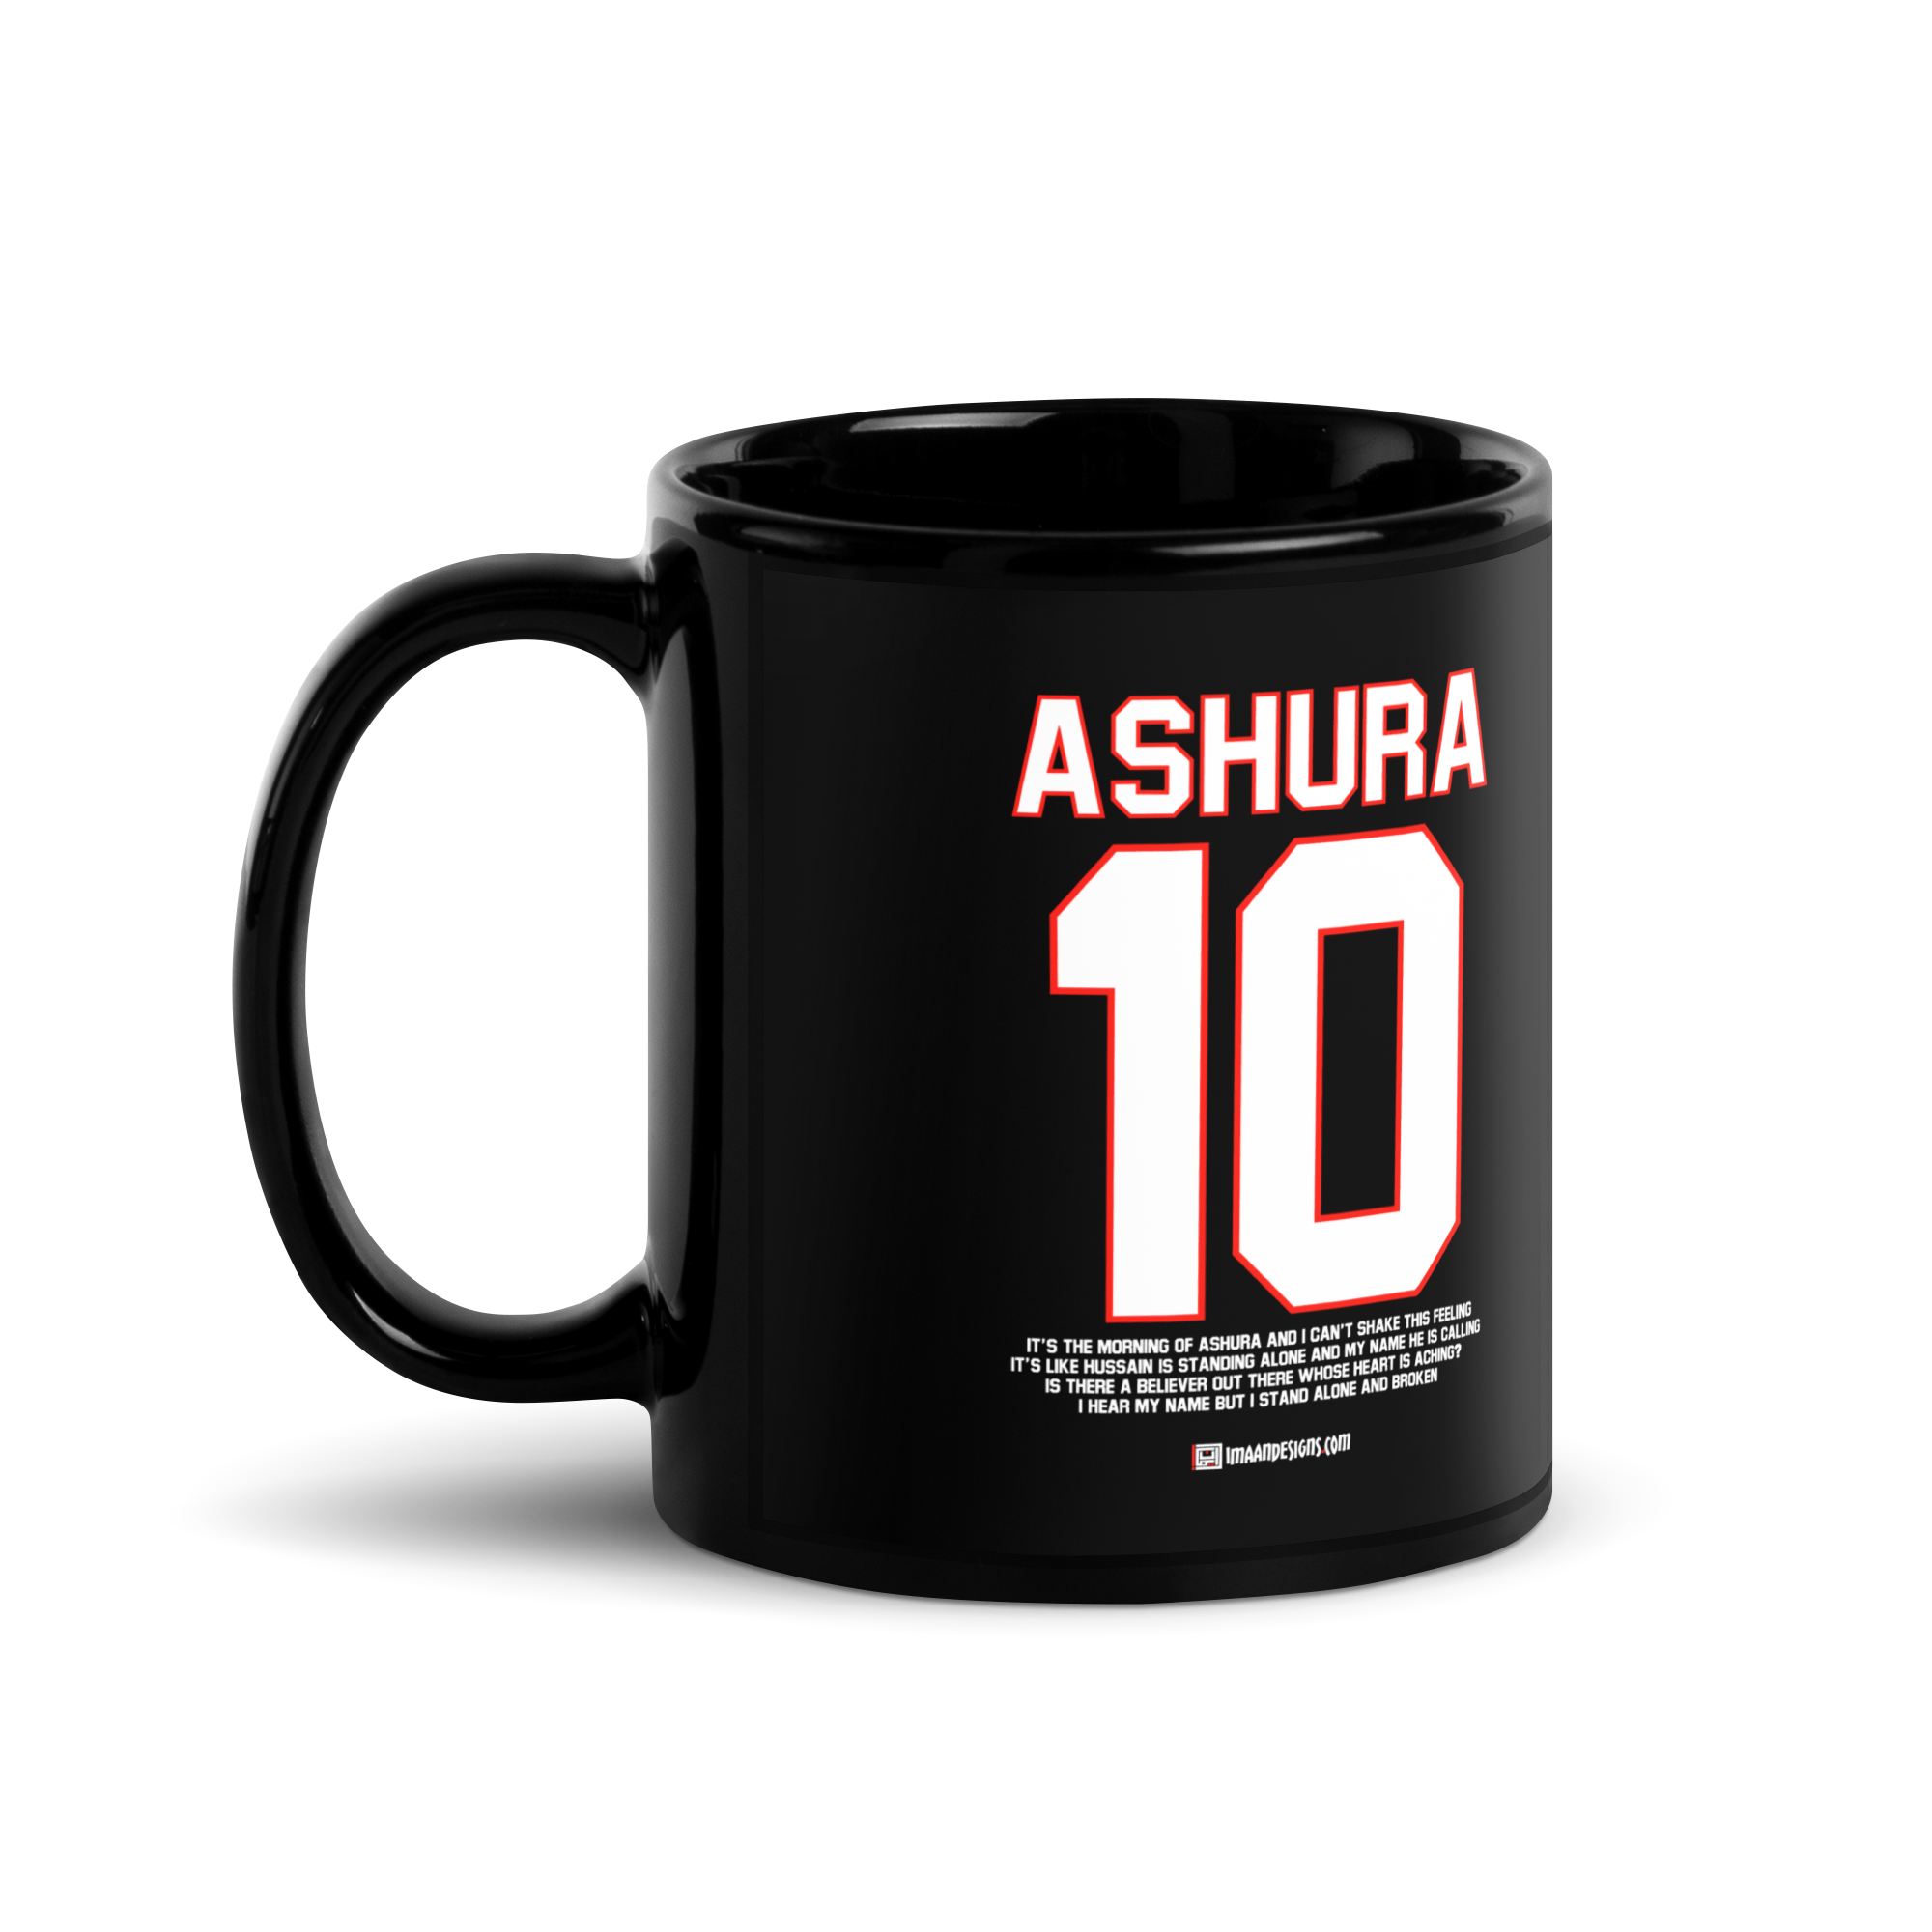 Ashura 10 - Black Mug